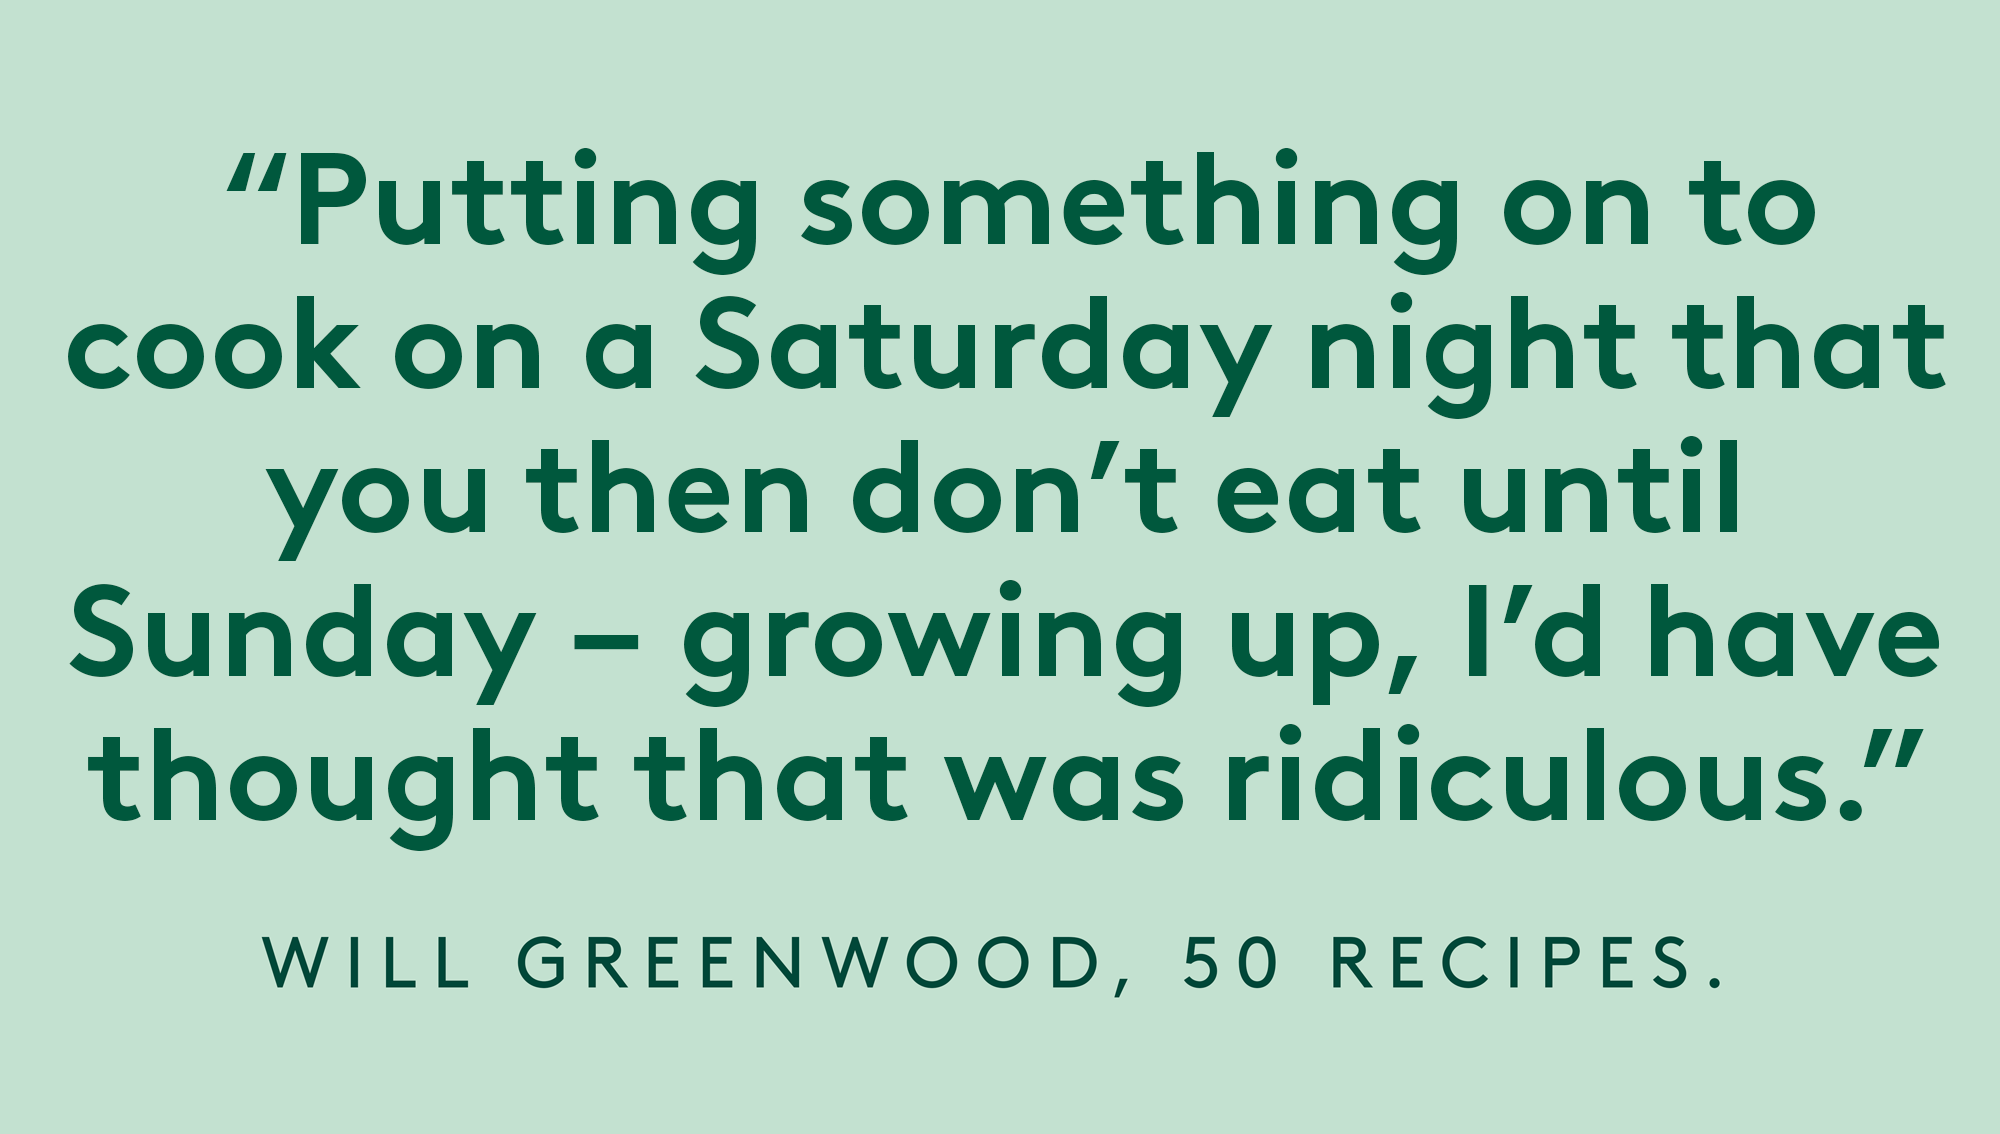 Will Greenwood | Big GReen Egg 50 recipes